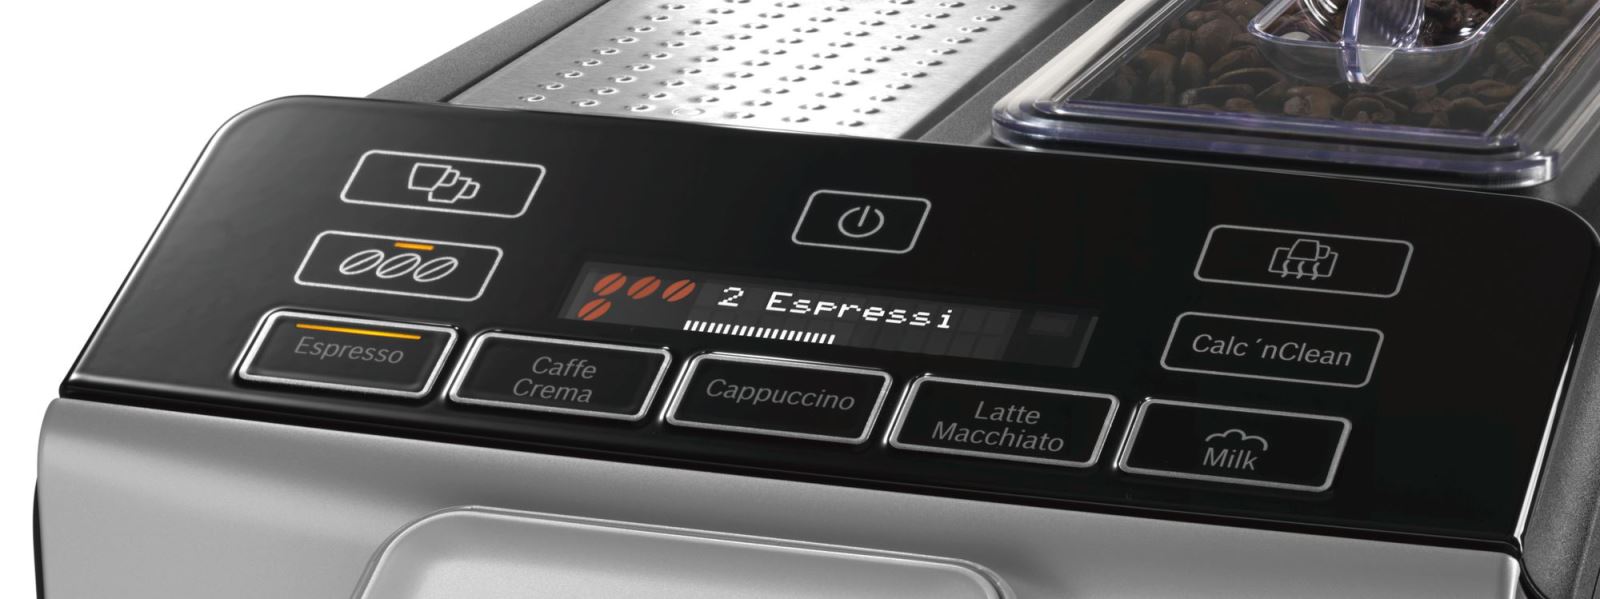 Espressor automat Bosch VeroCup 300 TIS30321RW